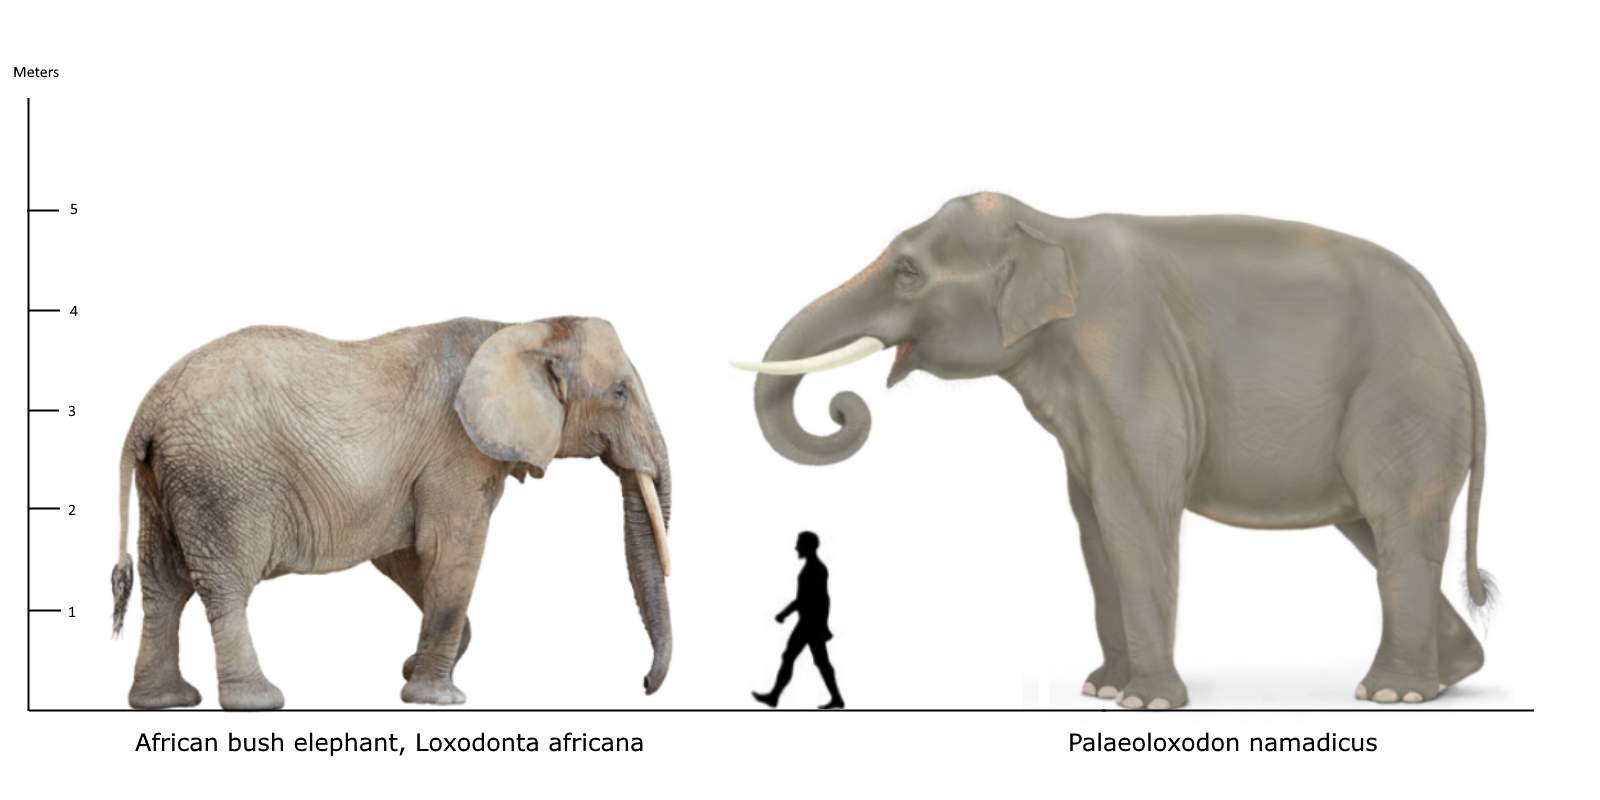 African-Elephant-vs-Palaeoloxodon-namadicus-vs-human-size.jpg